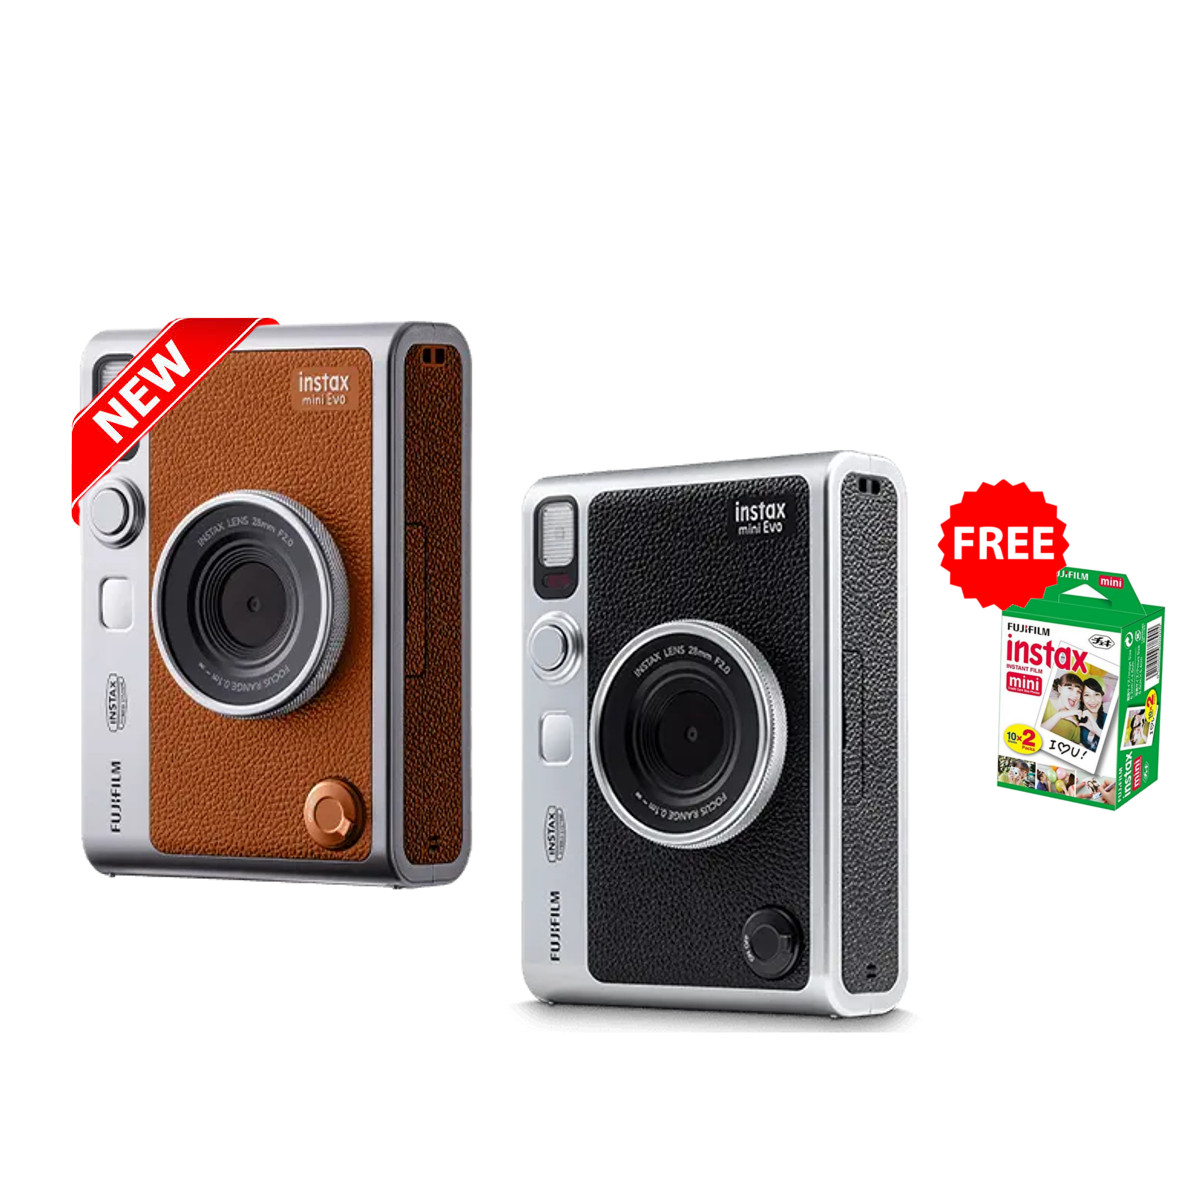 Fujfilm Instax Mini Evo Hybrid Instant Camera with Bluetooth